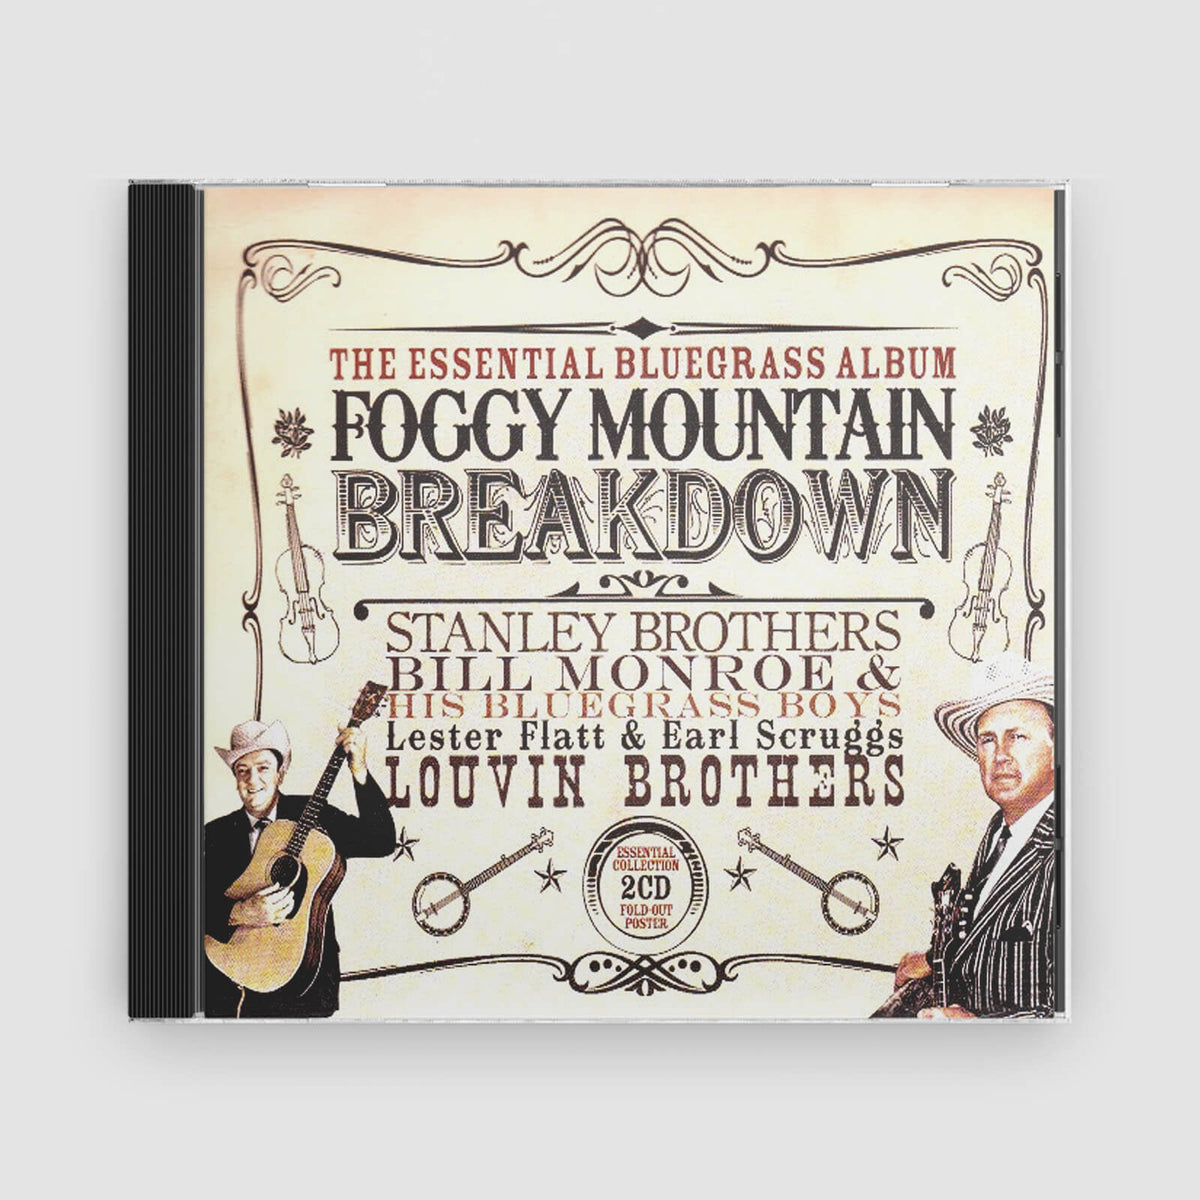 Foggy Mountain Breakdown : Foggy Mountain Breakdown -The Essential Bluegrass Album